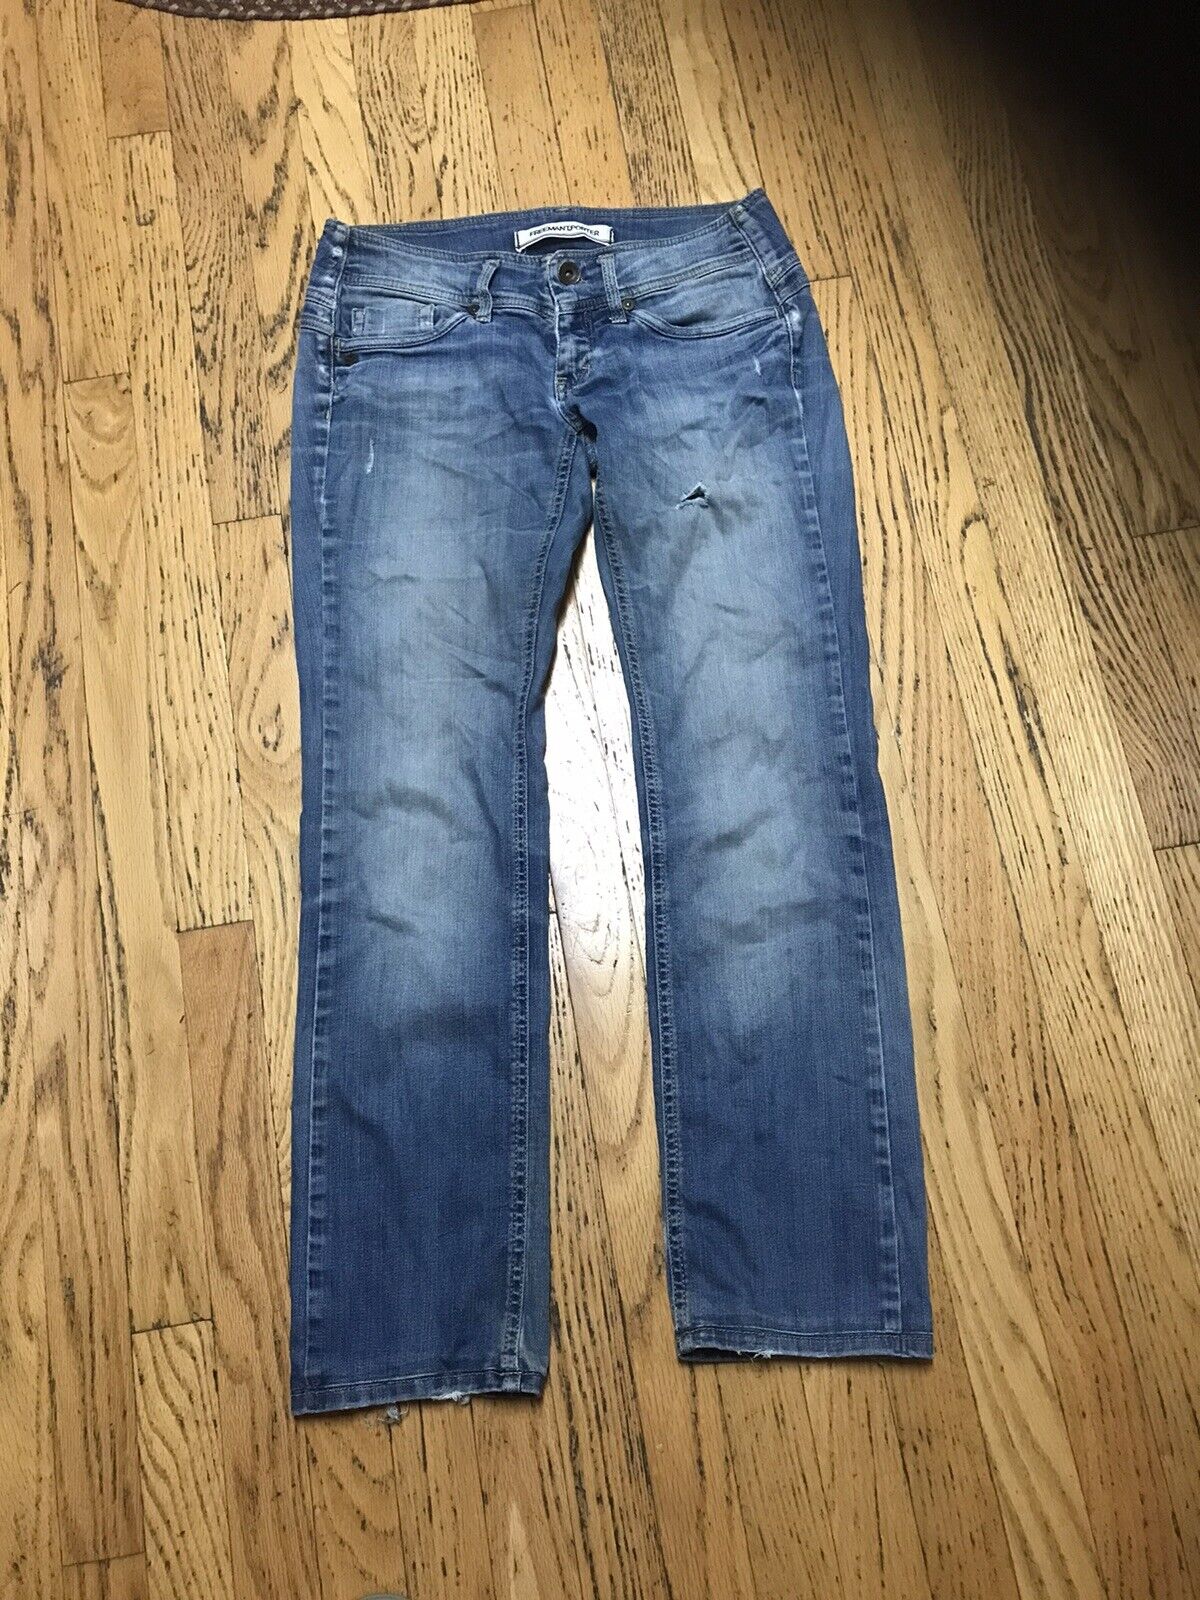 freeman t porter light wash jeans - image 1